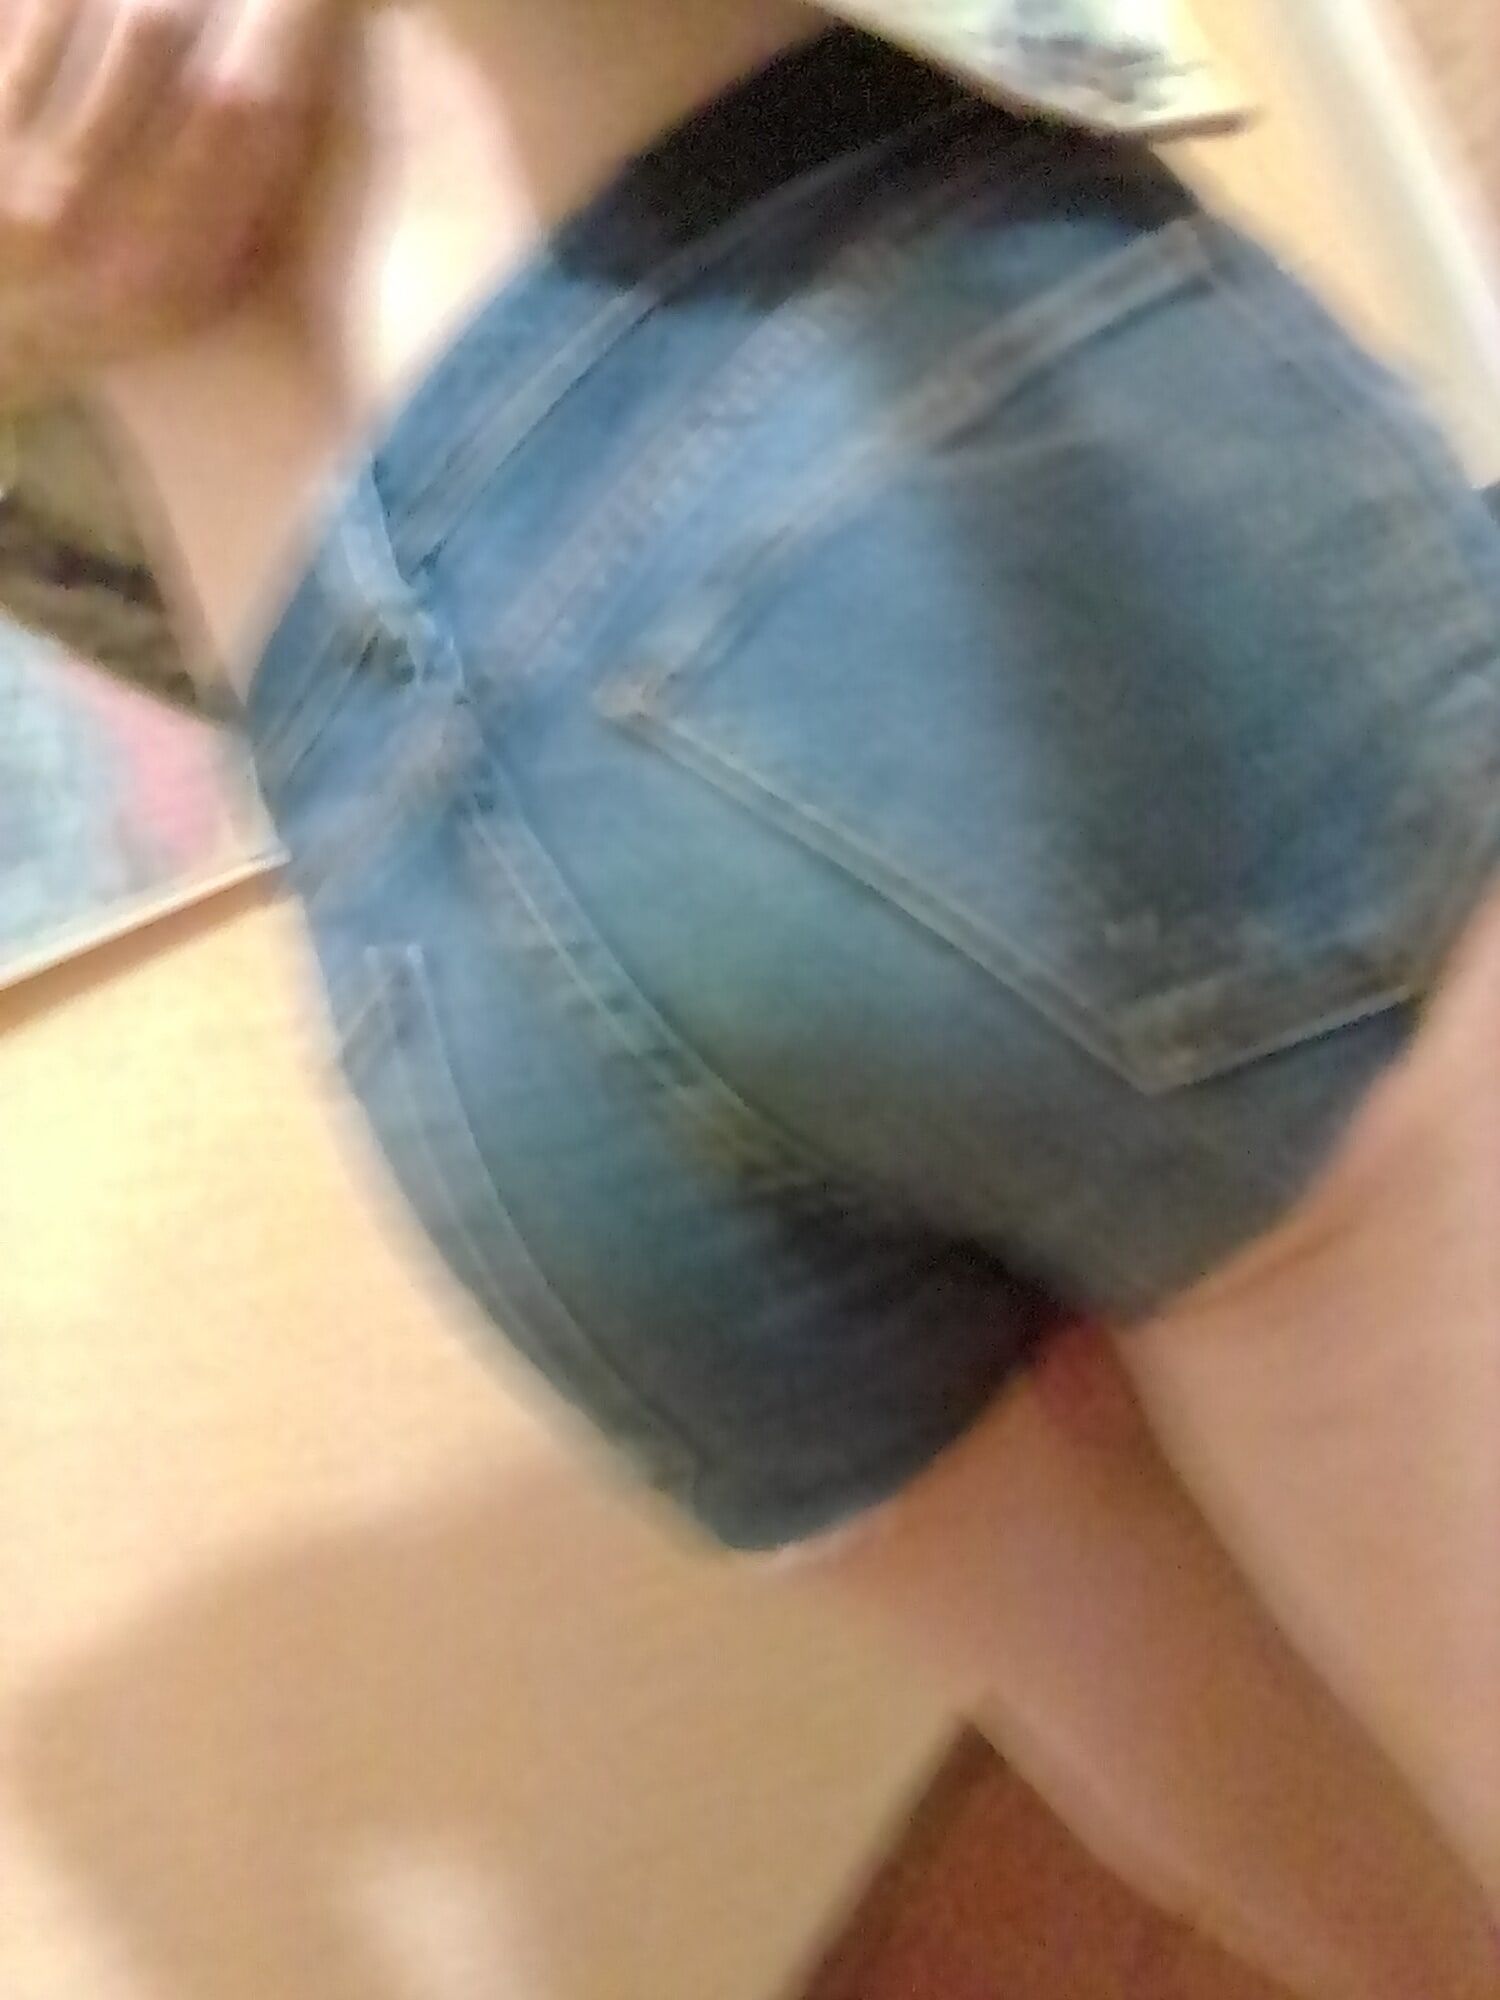 my ass in jean shorts #10